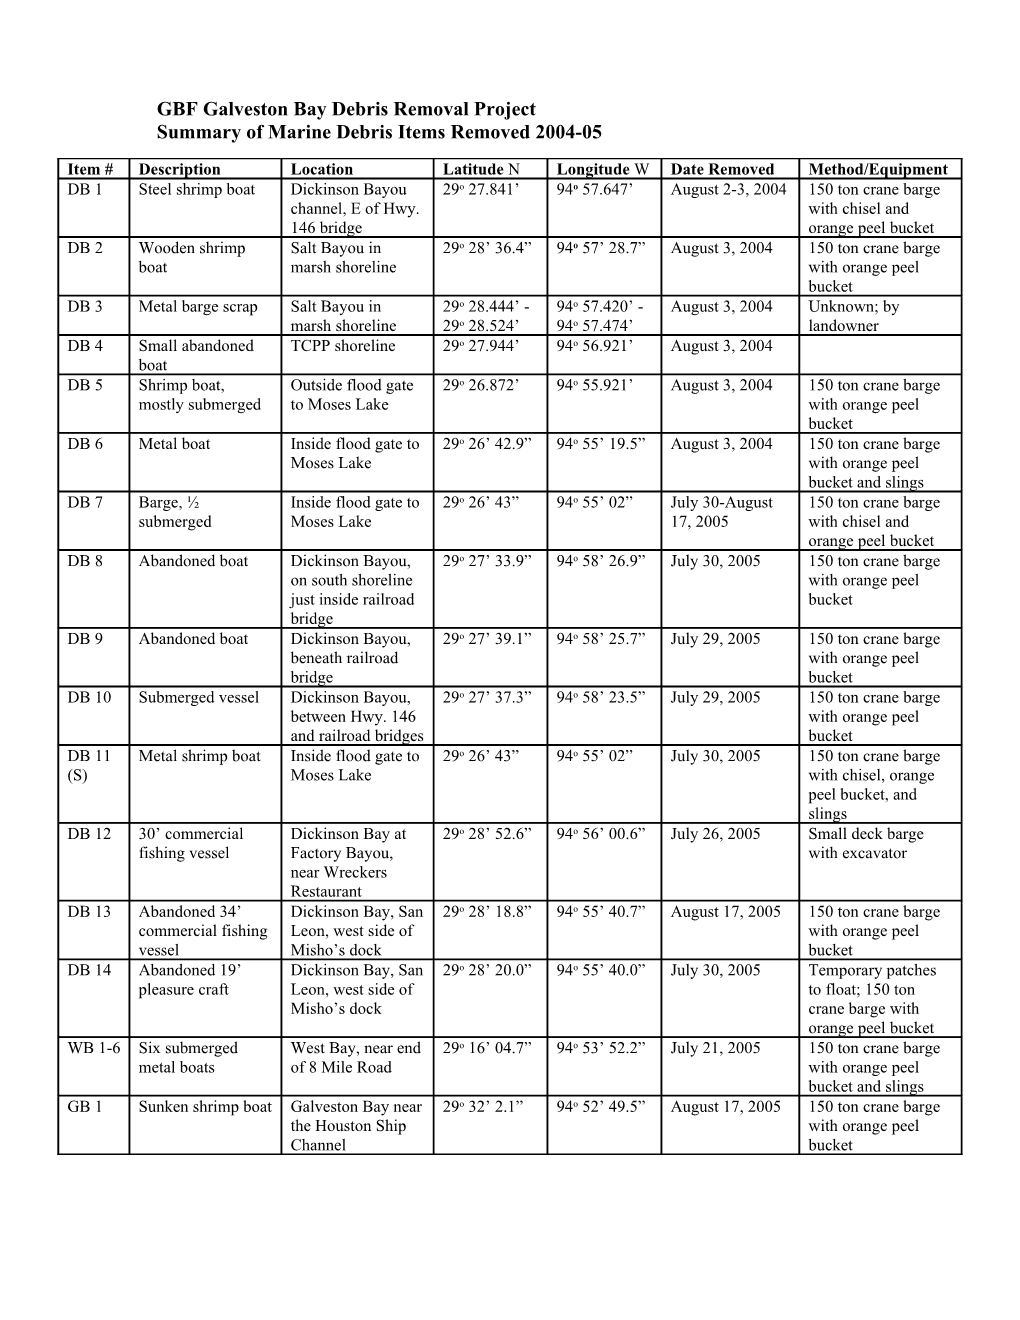 Table 1: Summary of 21 Marine Debris Items Removed